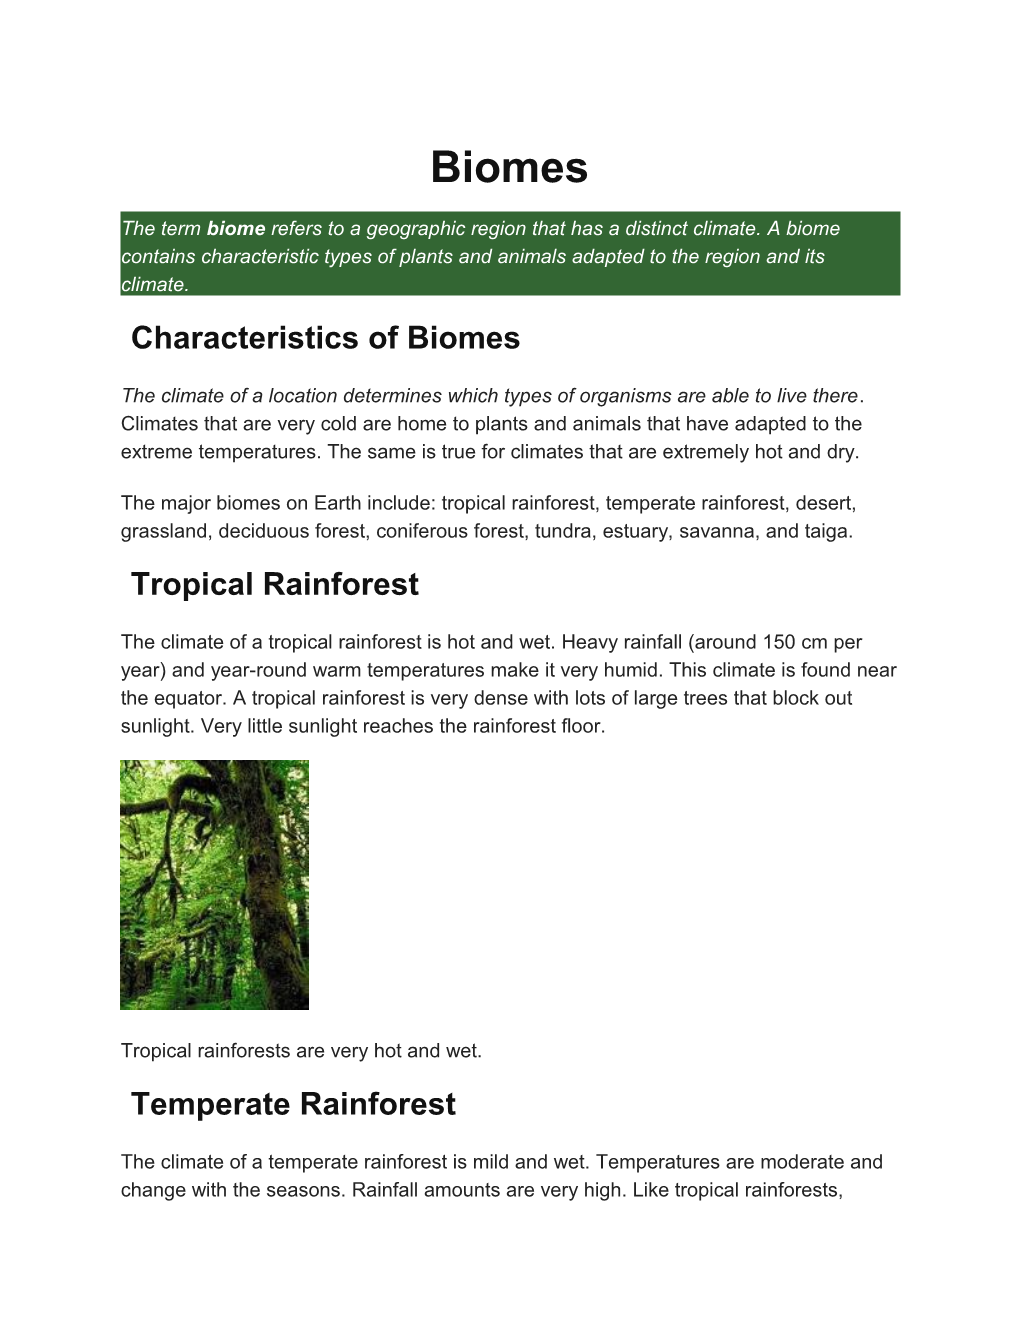 Characteristics of Biomes